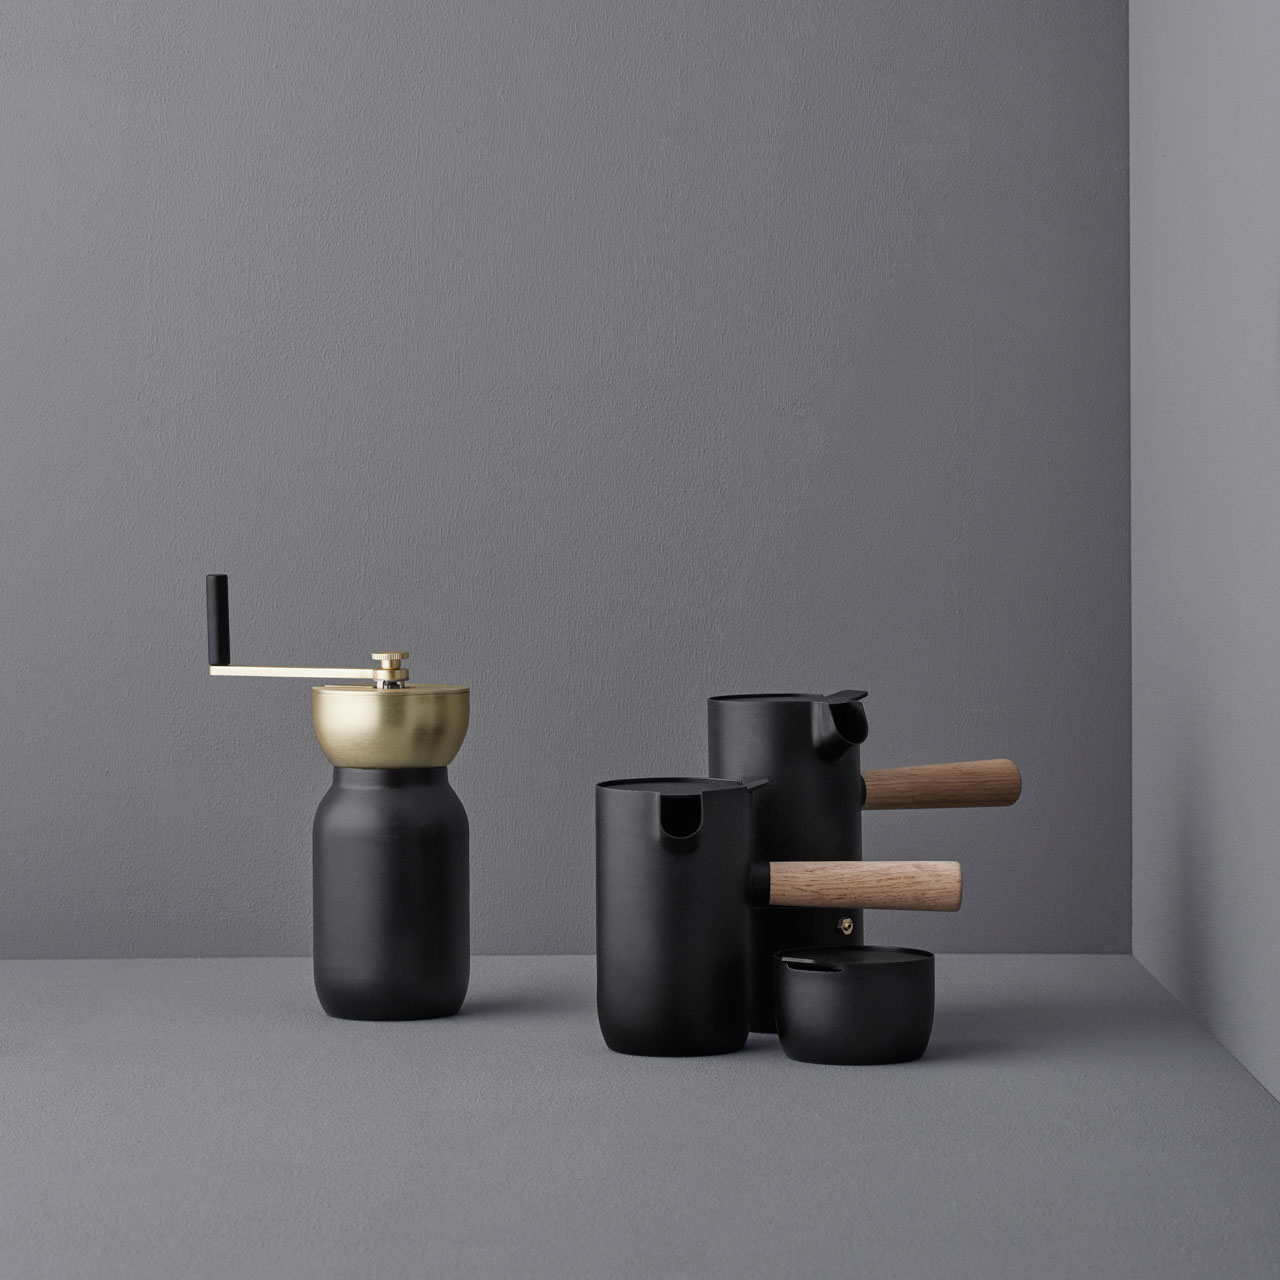 The Collar collection by Daniel Debiasi and Federico Sandri (Something design studio) for Stelton.